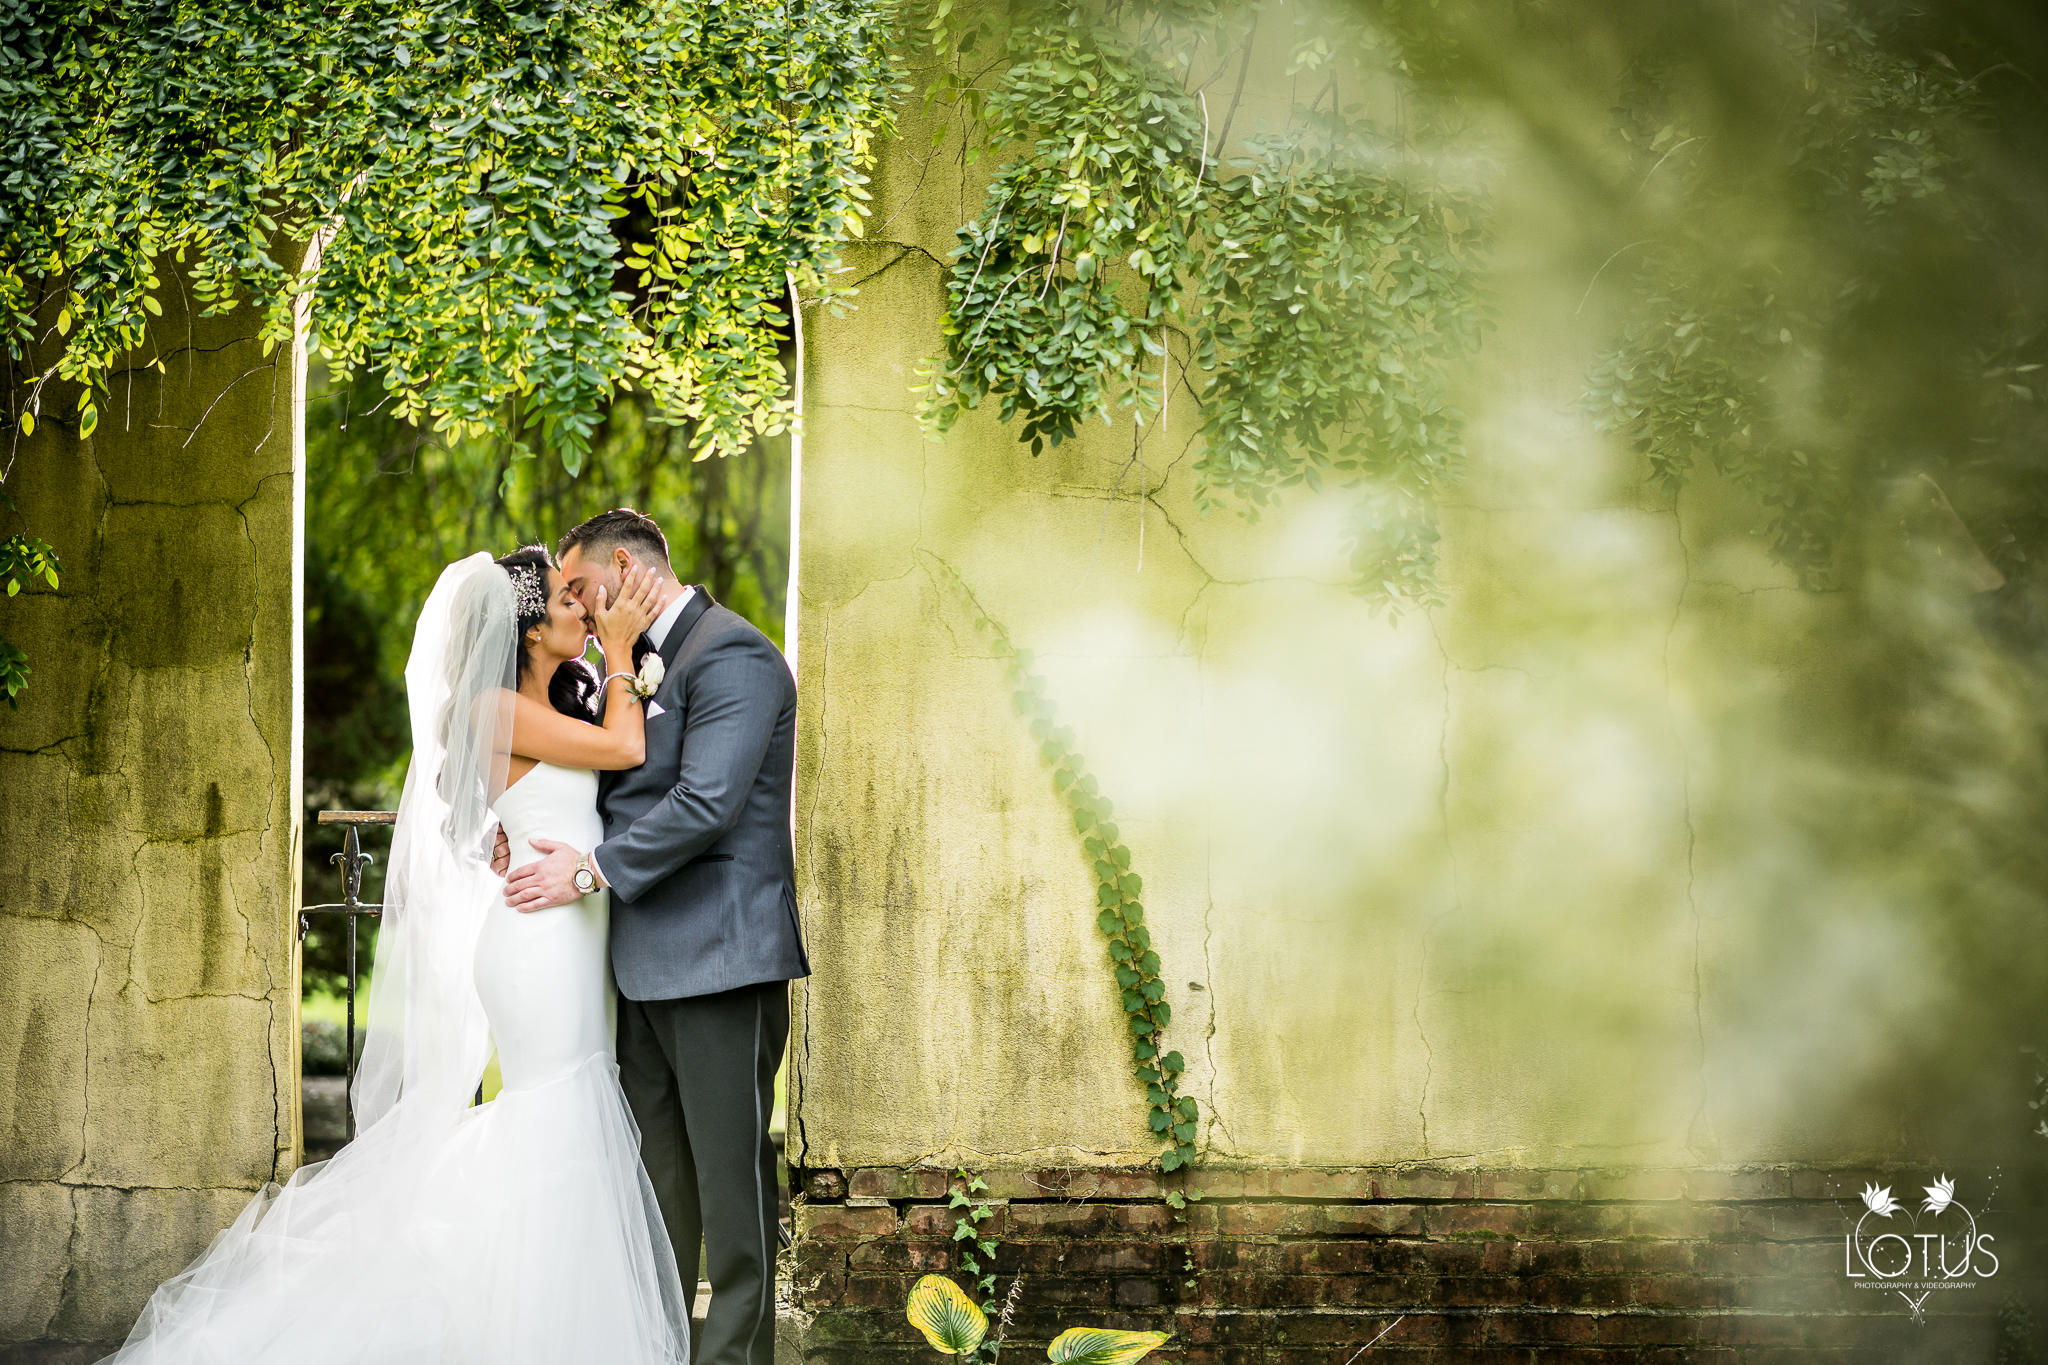 Lotus Wedding Photography Photo